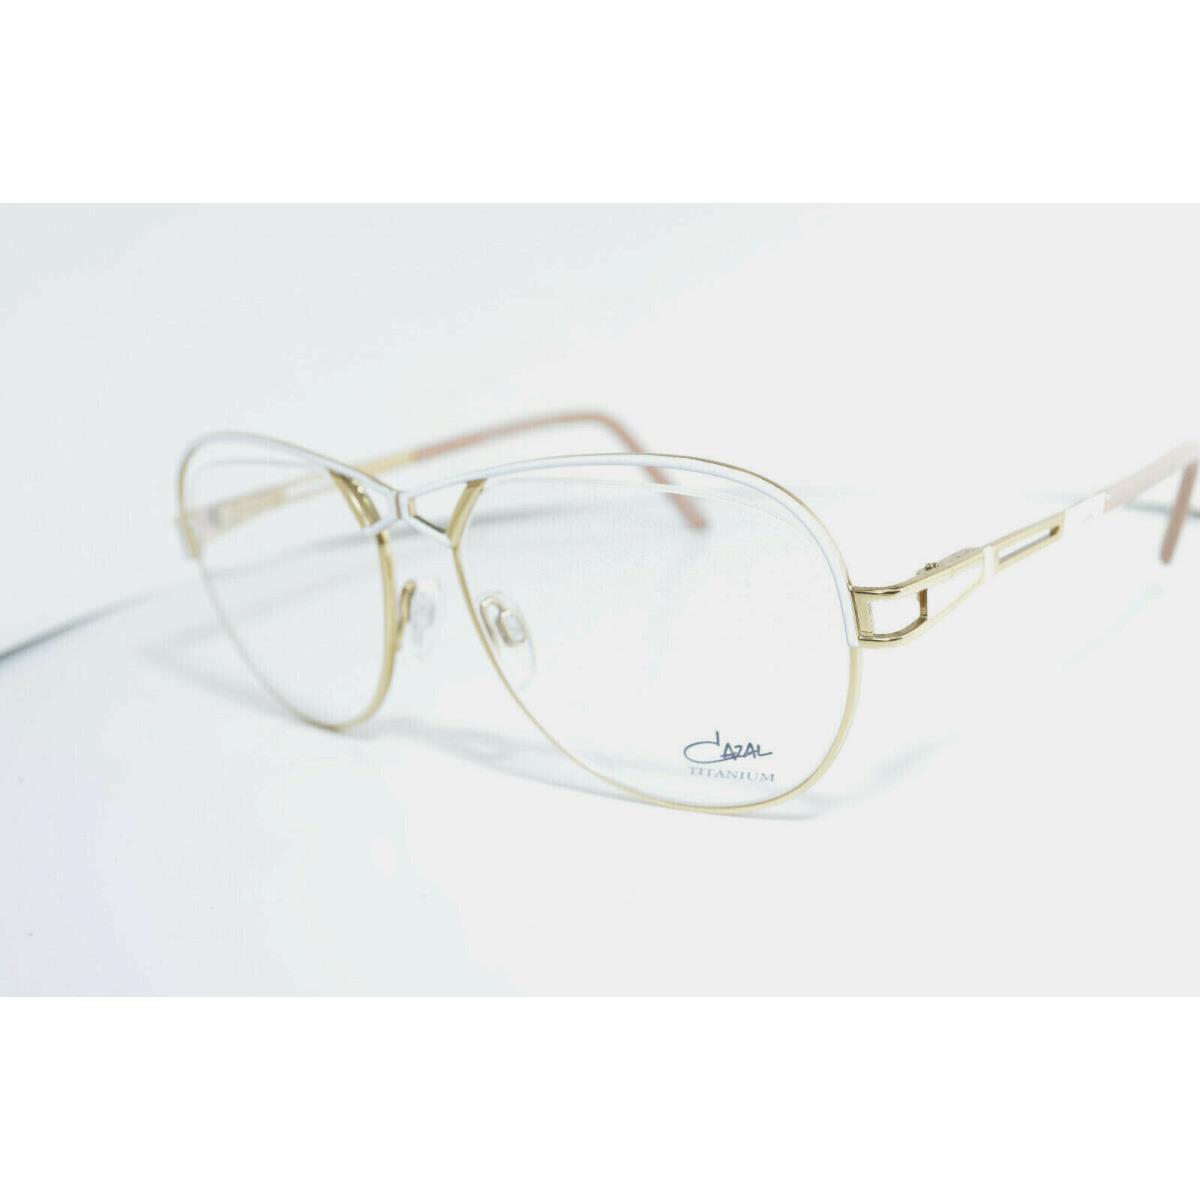 Cazal 4265 C004 Eyeglasses Frame